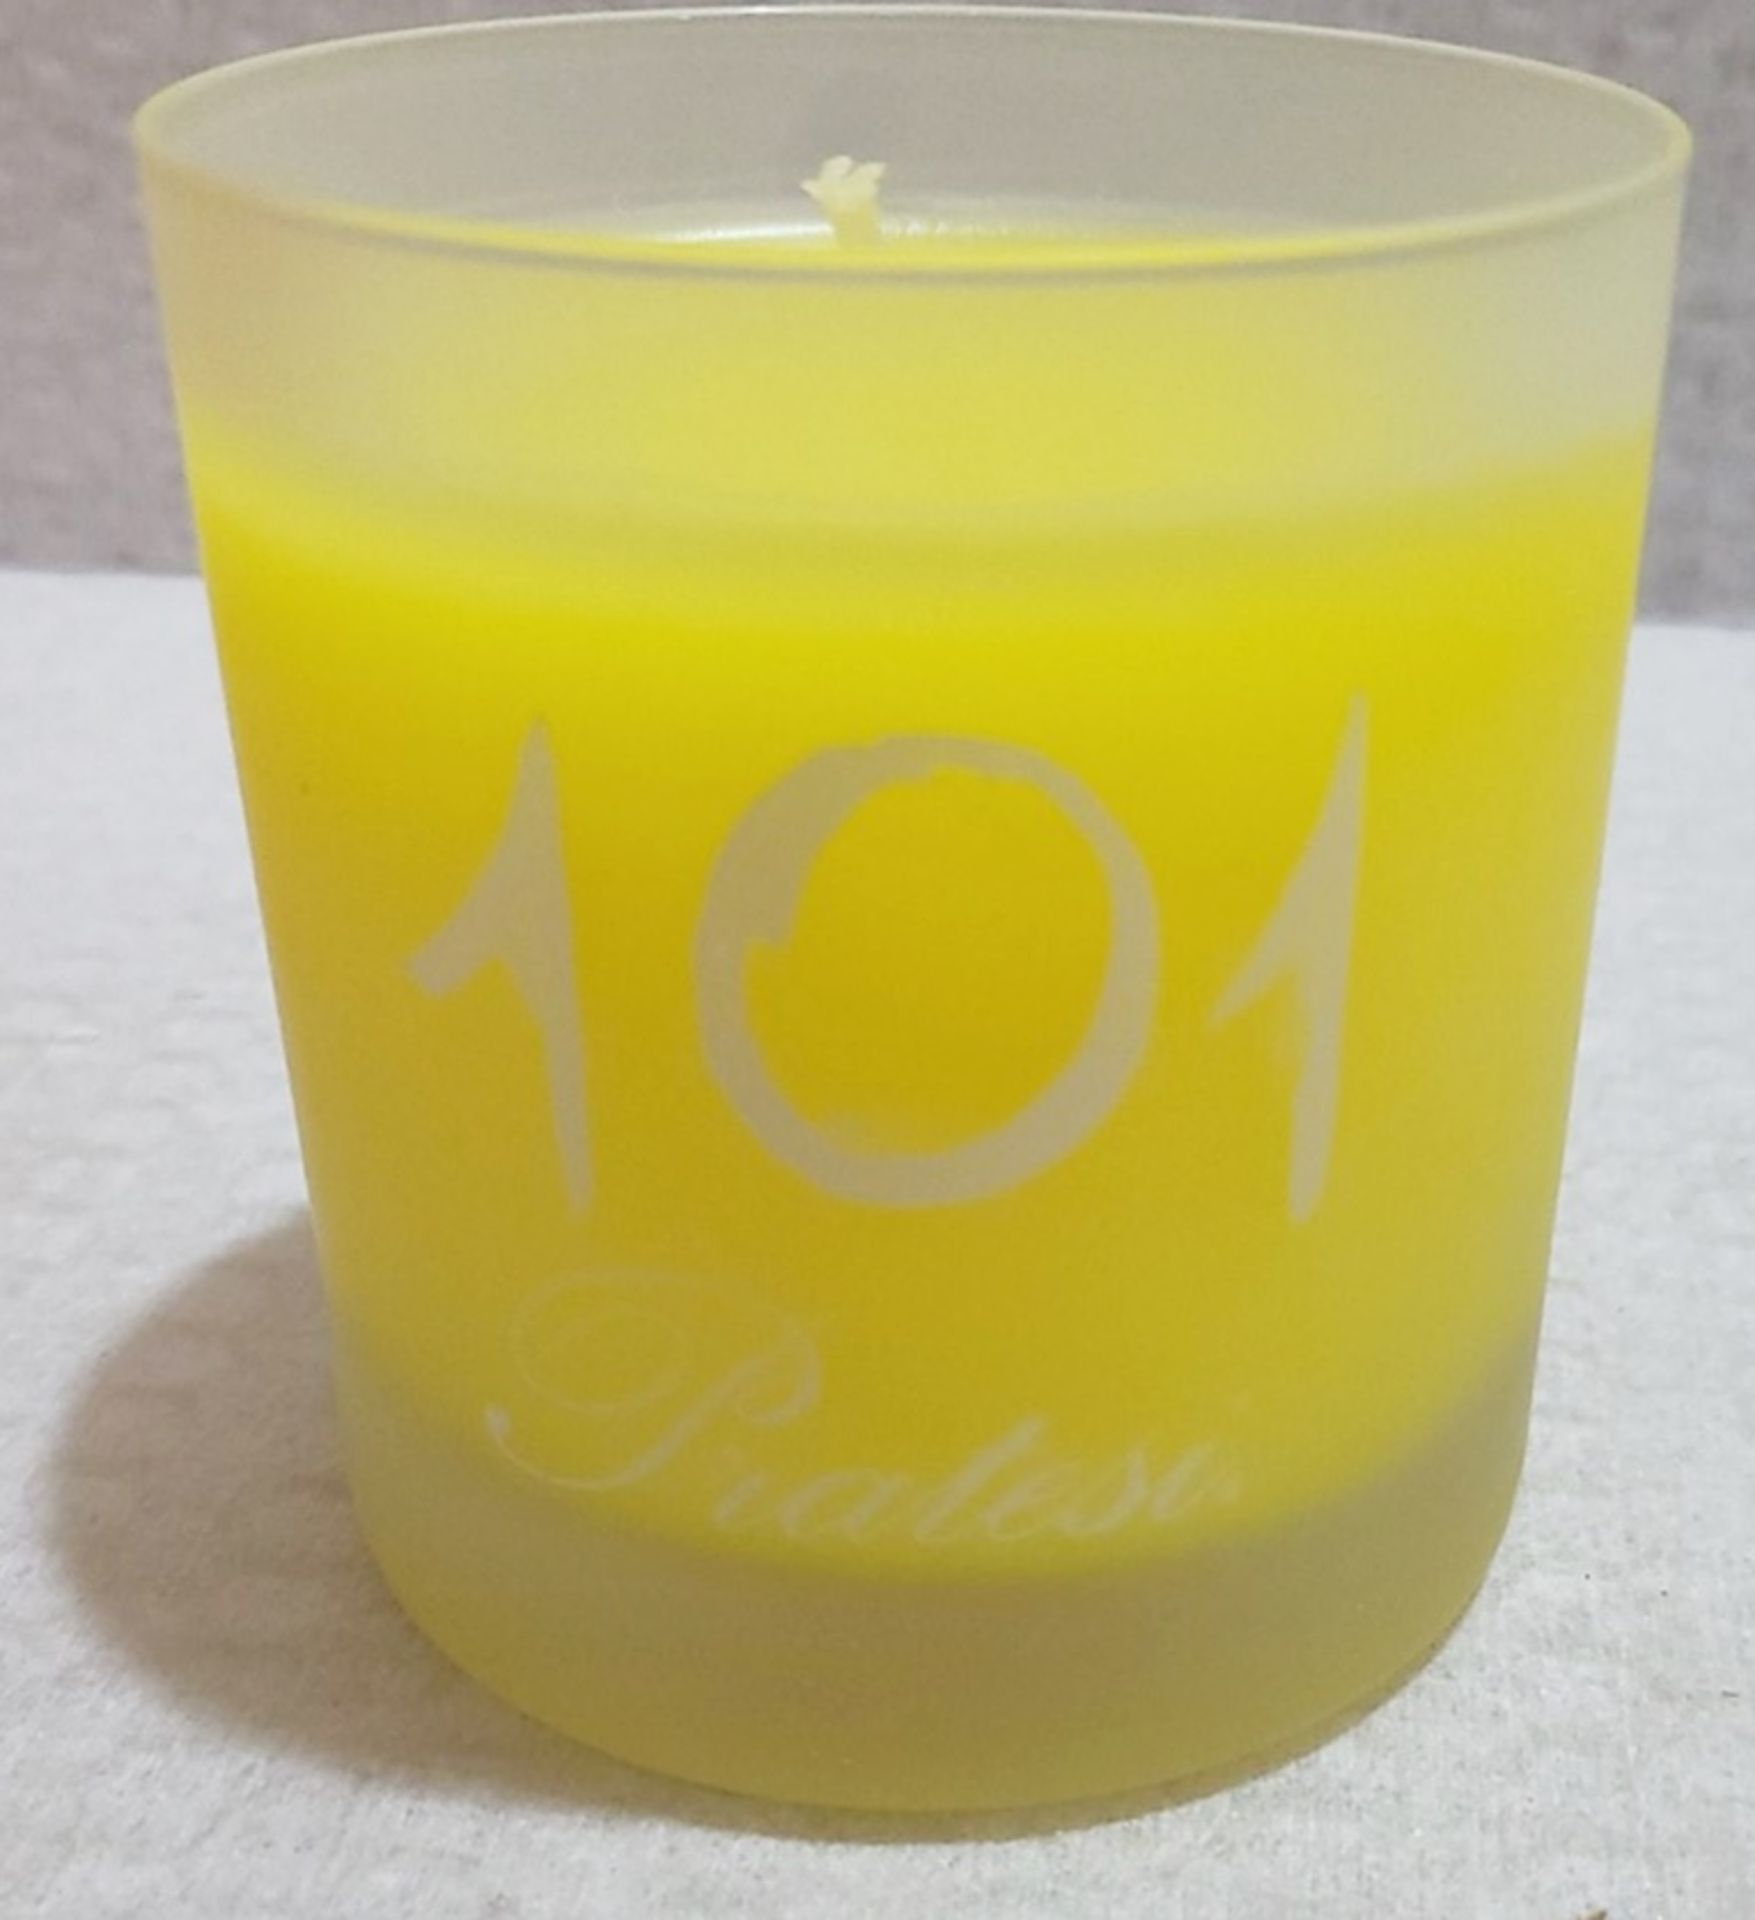 1 x PRATESI 101 Celebration Gialle In Fiore Scented Candle 200g - Original Price £60.00 - Unused - Image 2 of 6